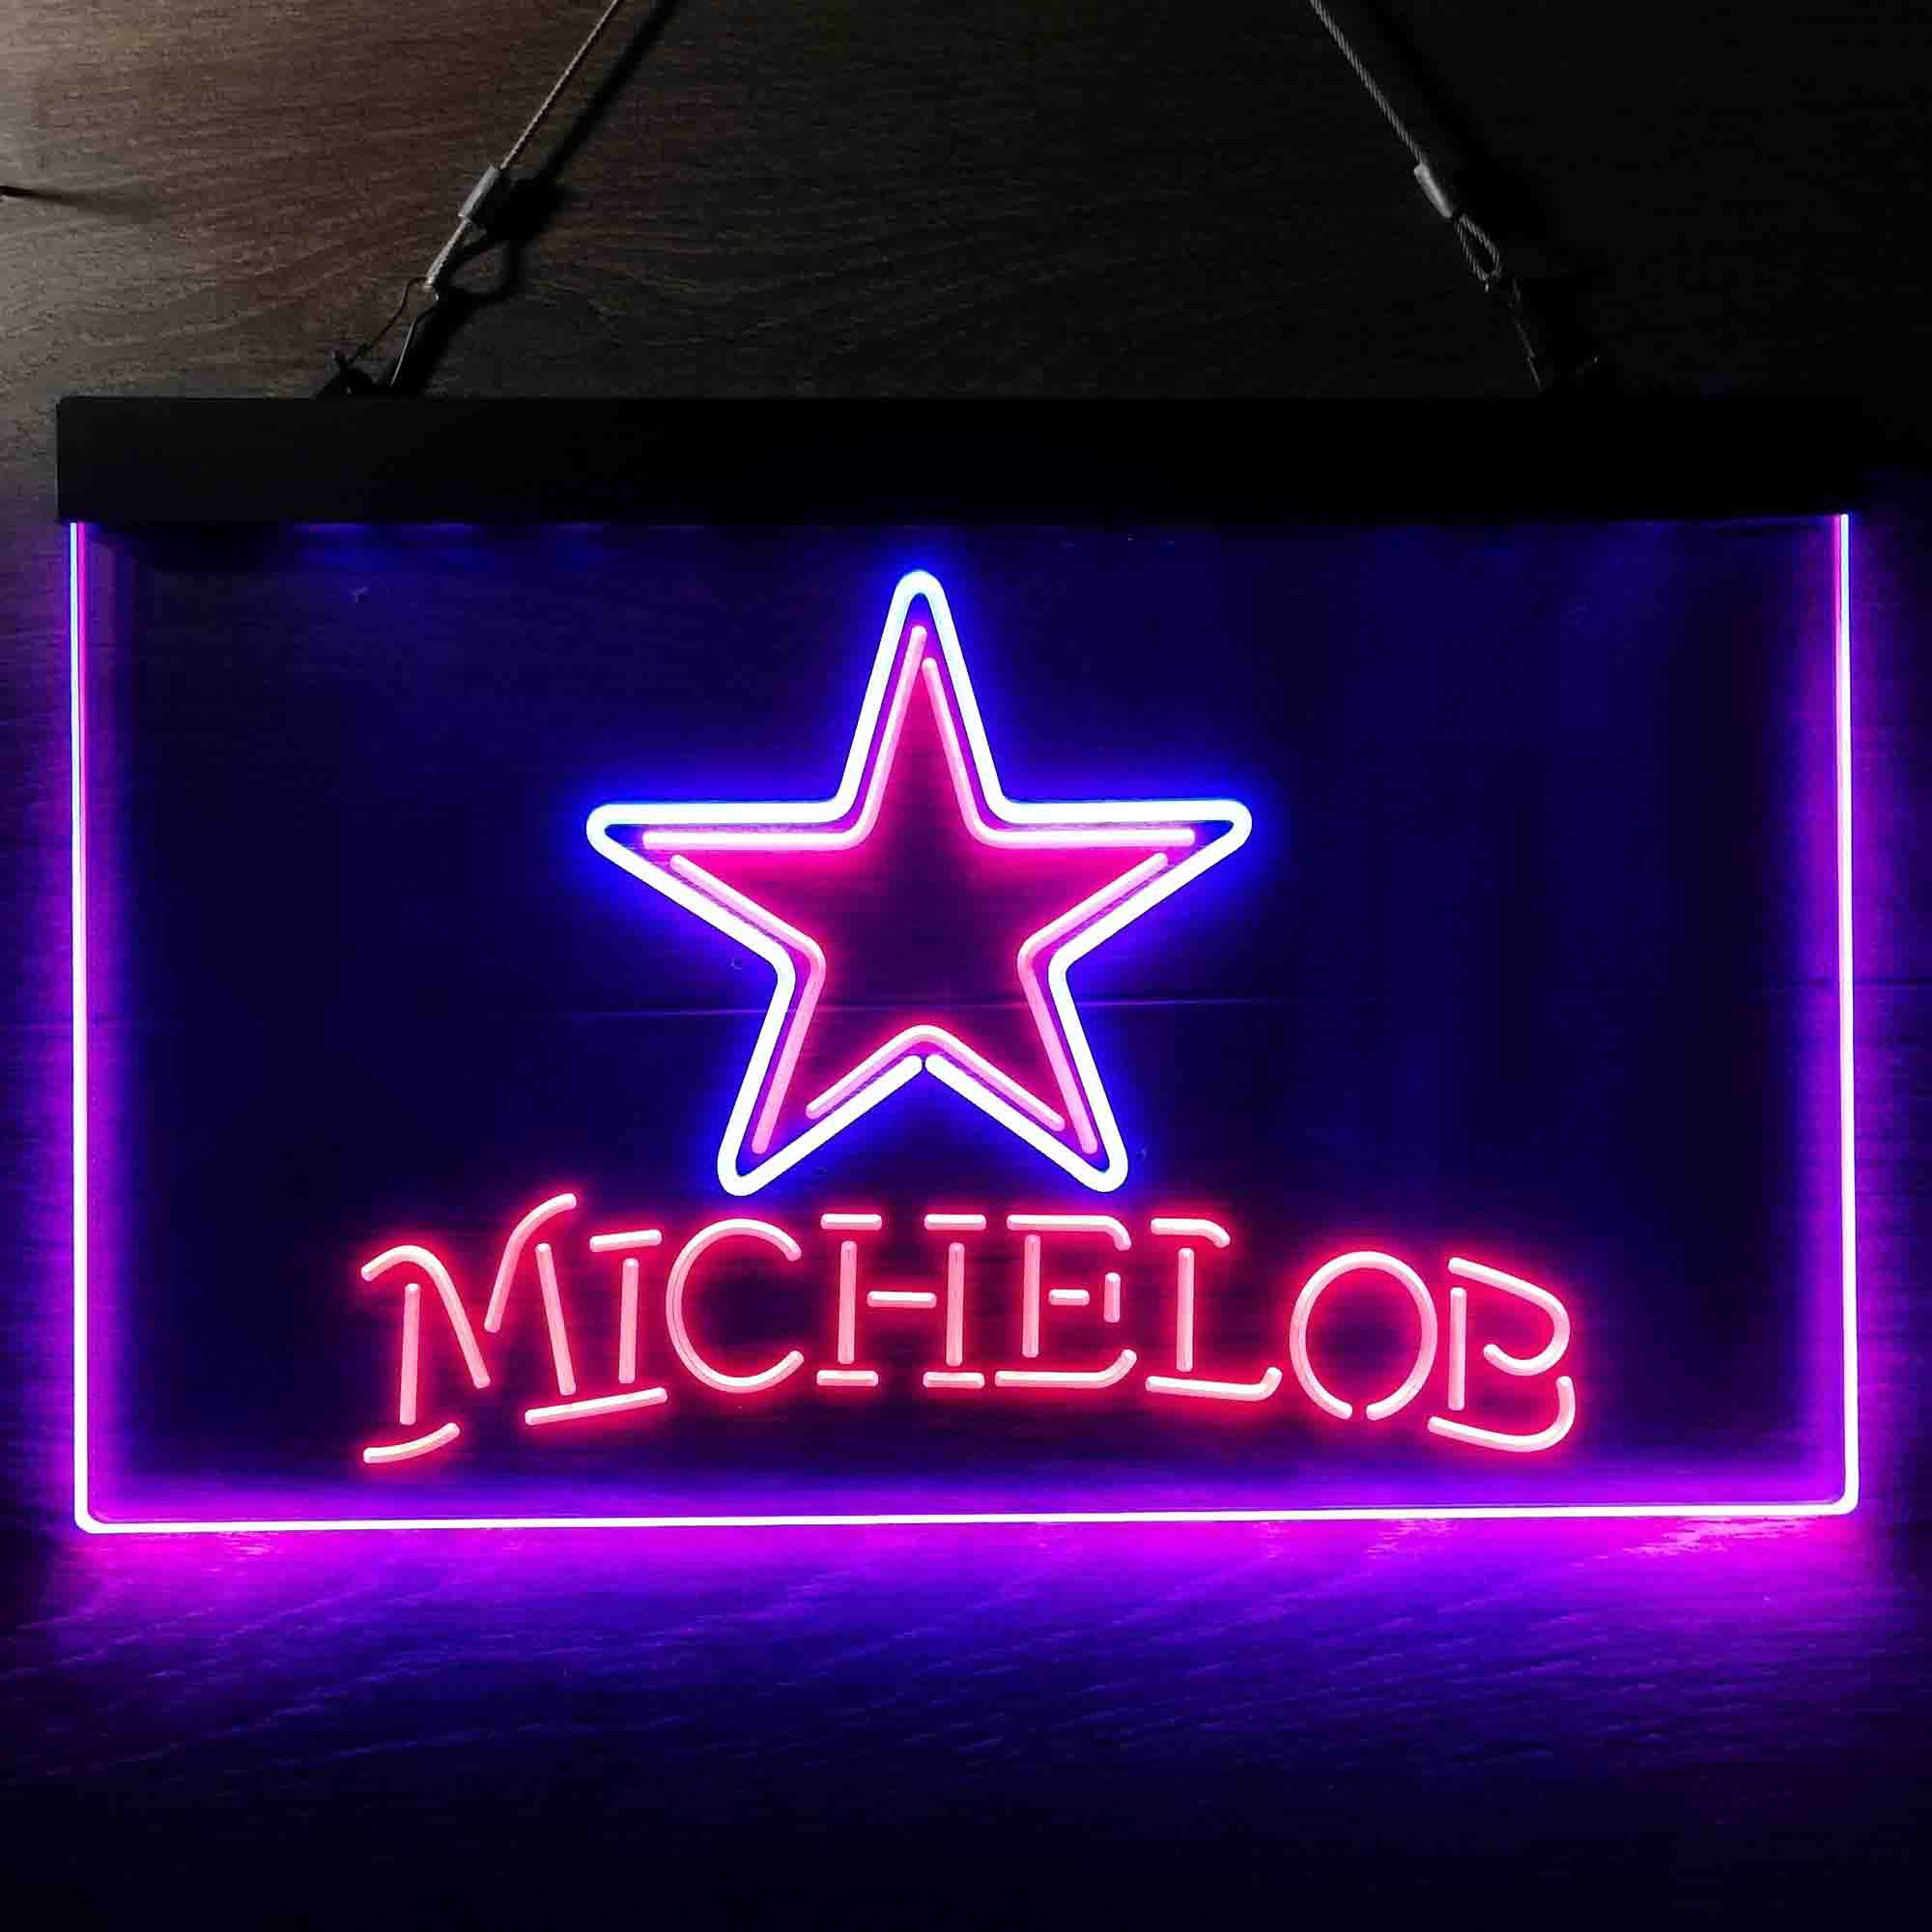 Michelob Bar Dallas Cowboys Est. 1960 Neon-Like LED Sign